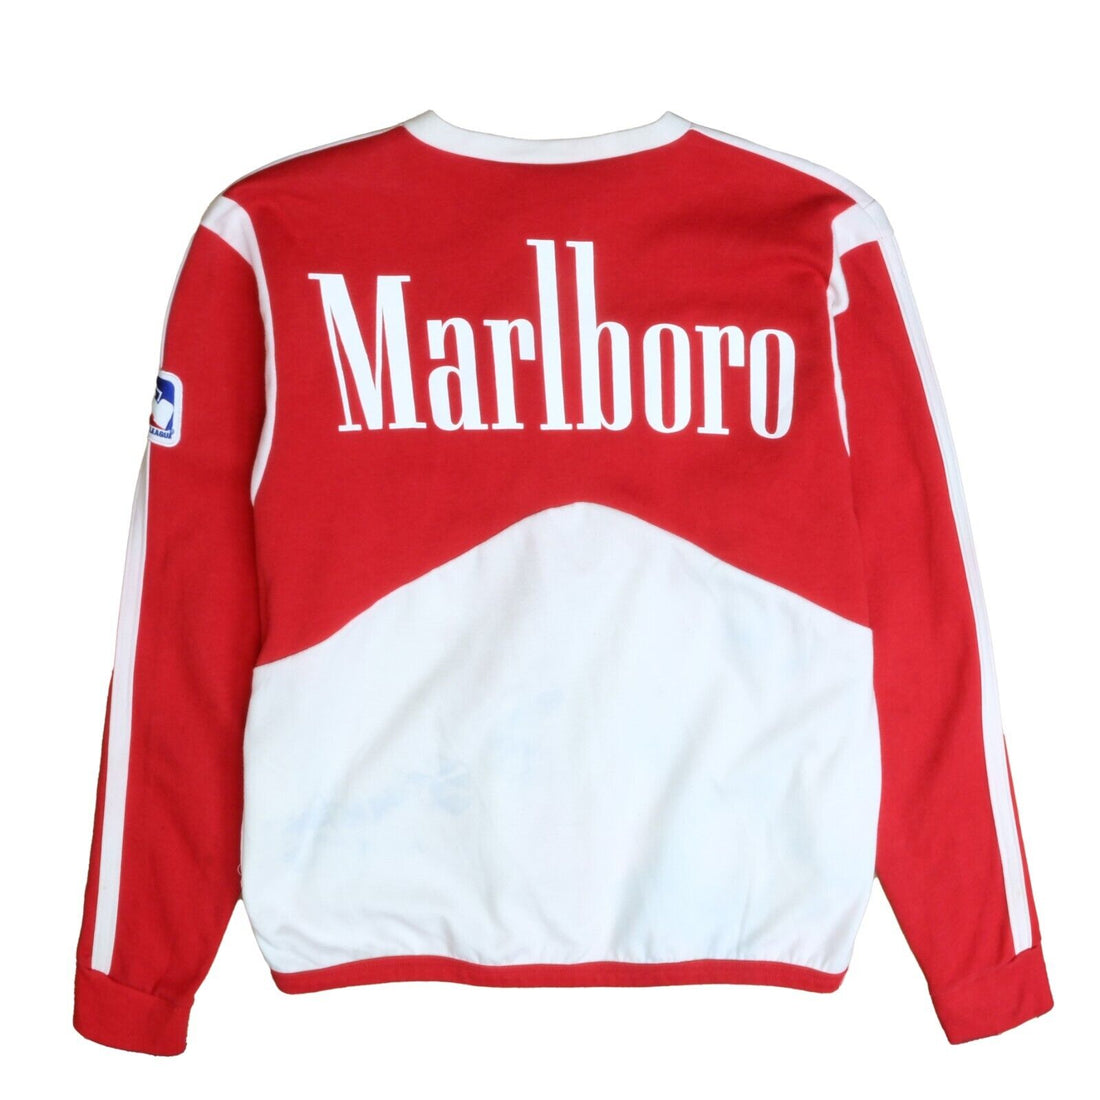 Vintage Marlboro Full Zip Sweatshirt Size Medium Red